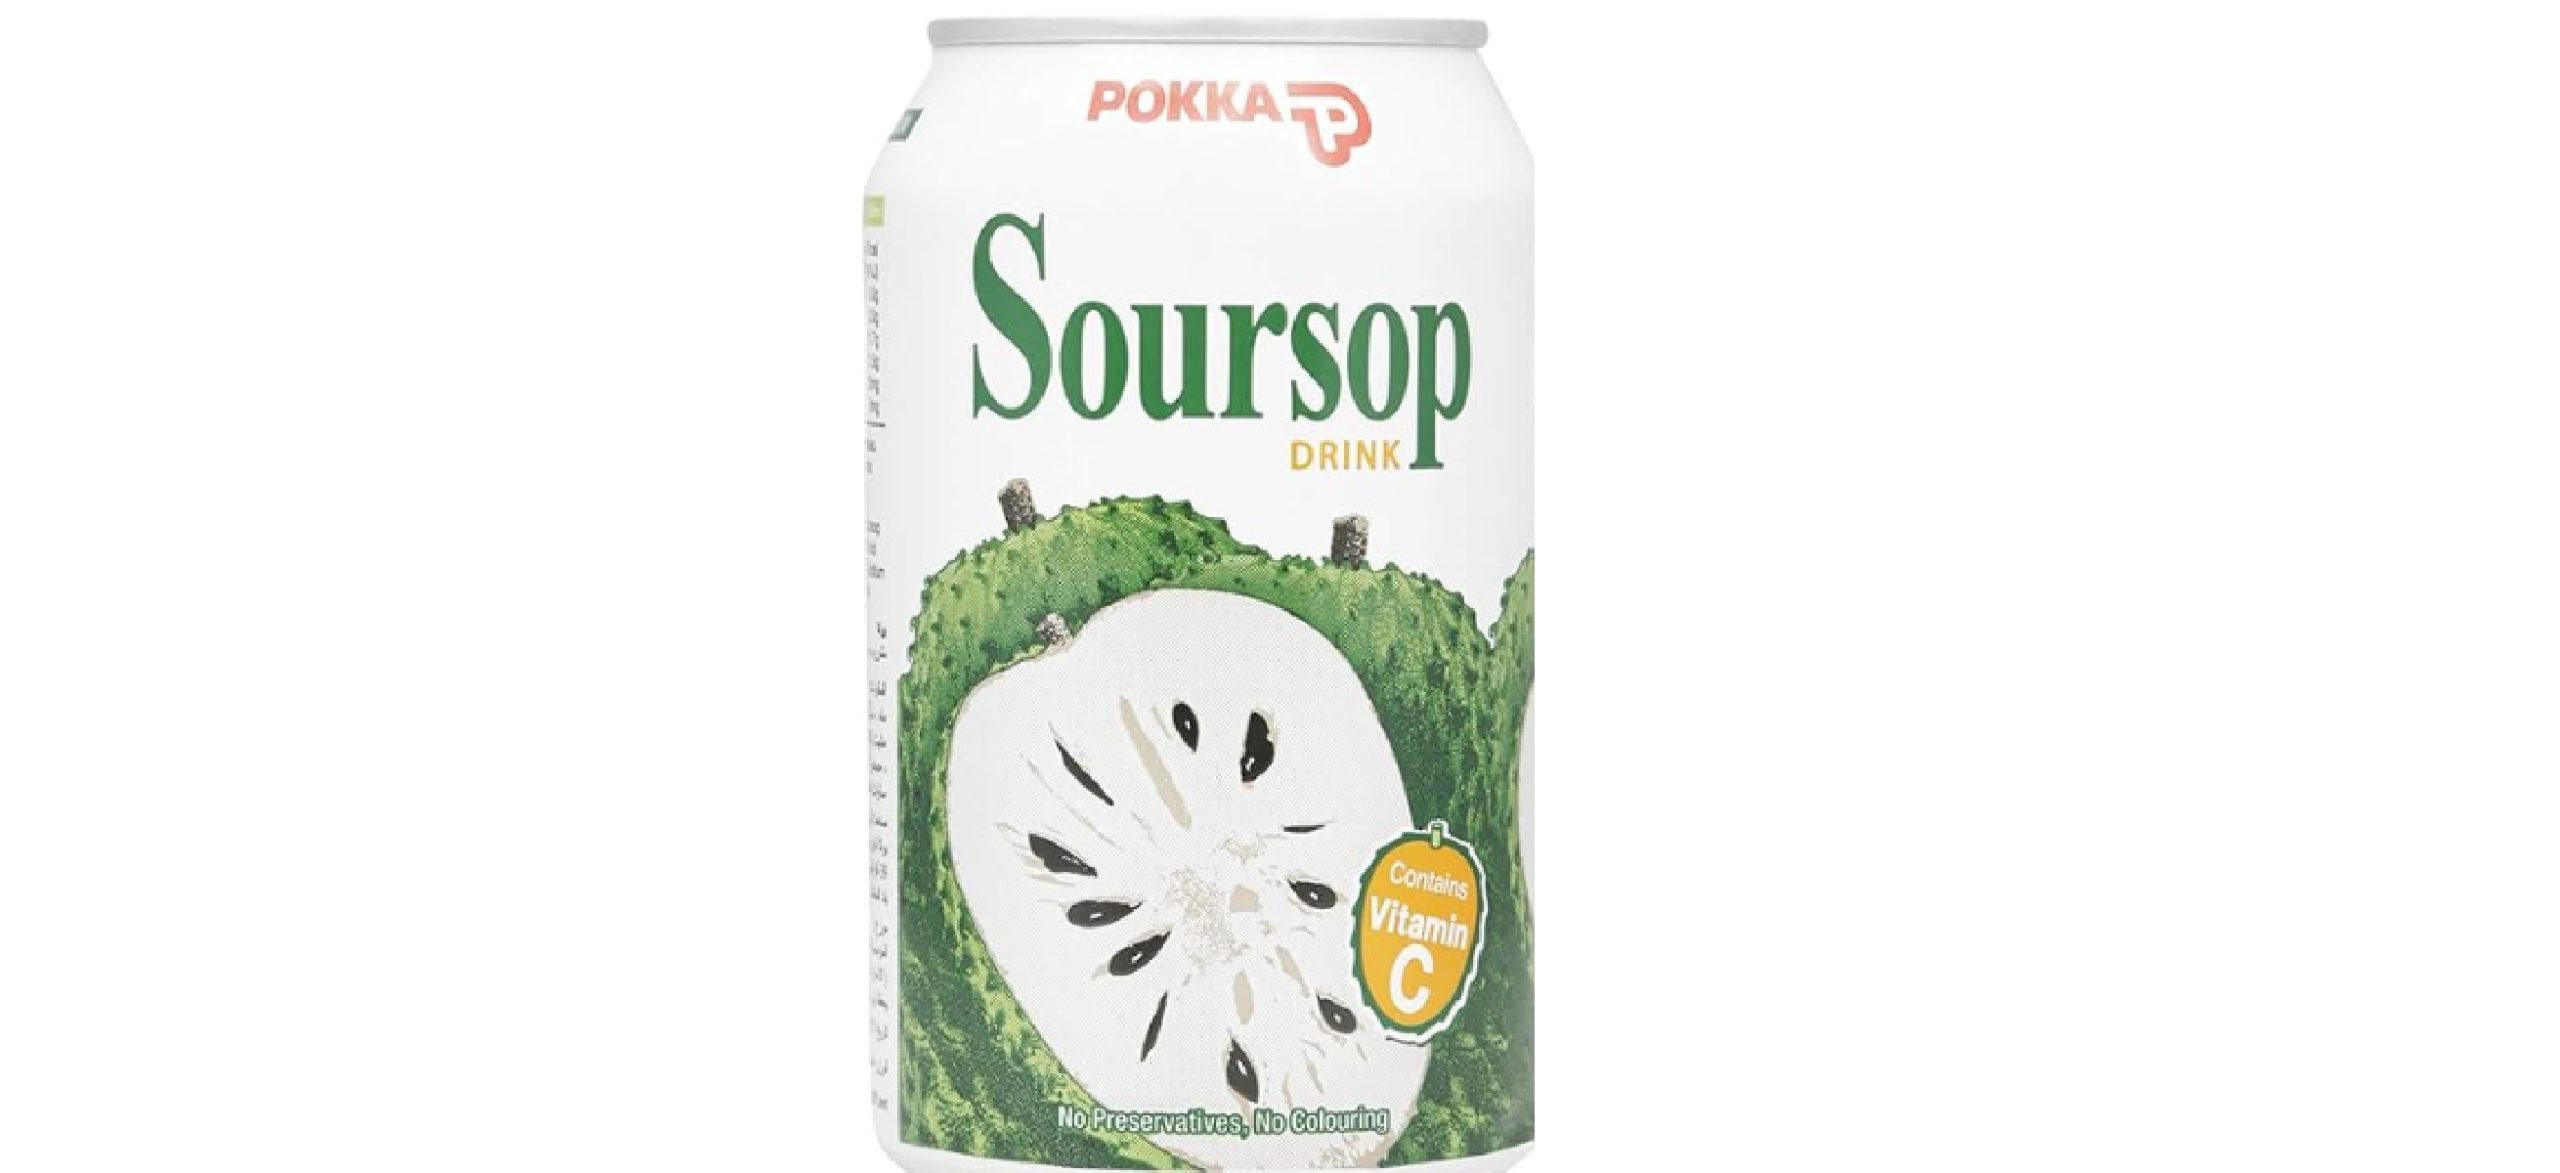 Pokka Soursop Juice Drink -300ml